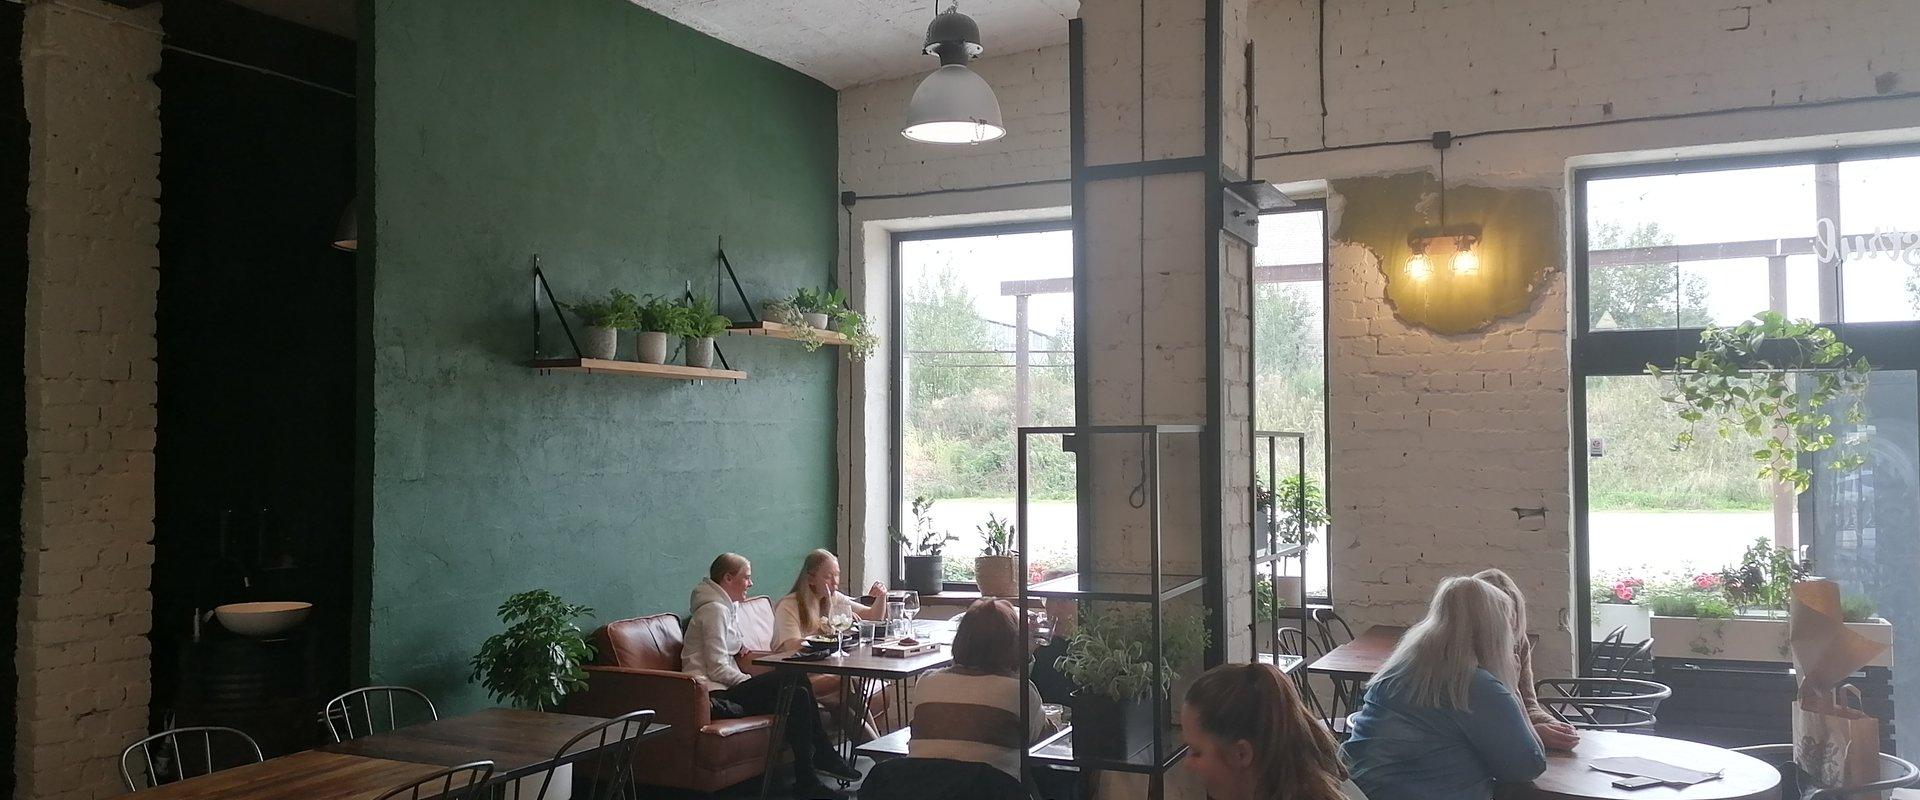 Cafe Kastrul in the Segutorni quarter